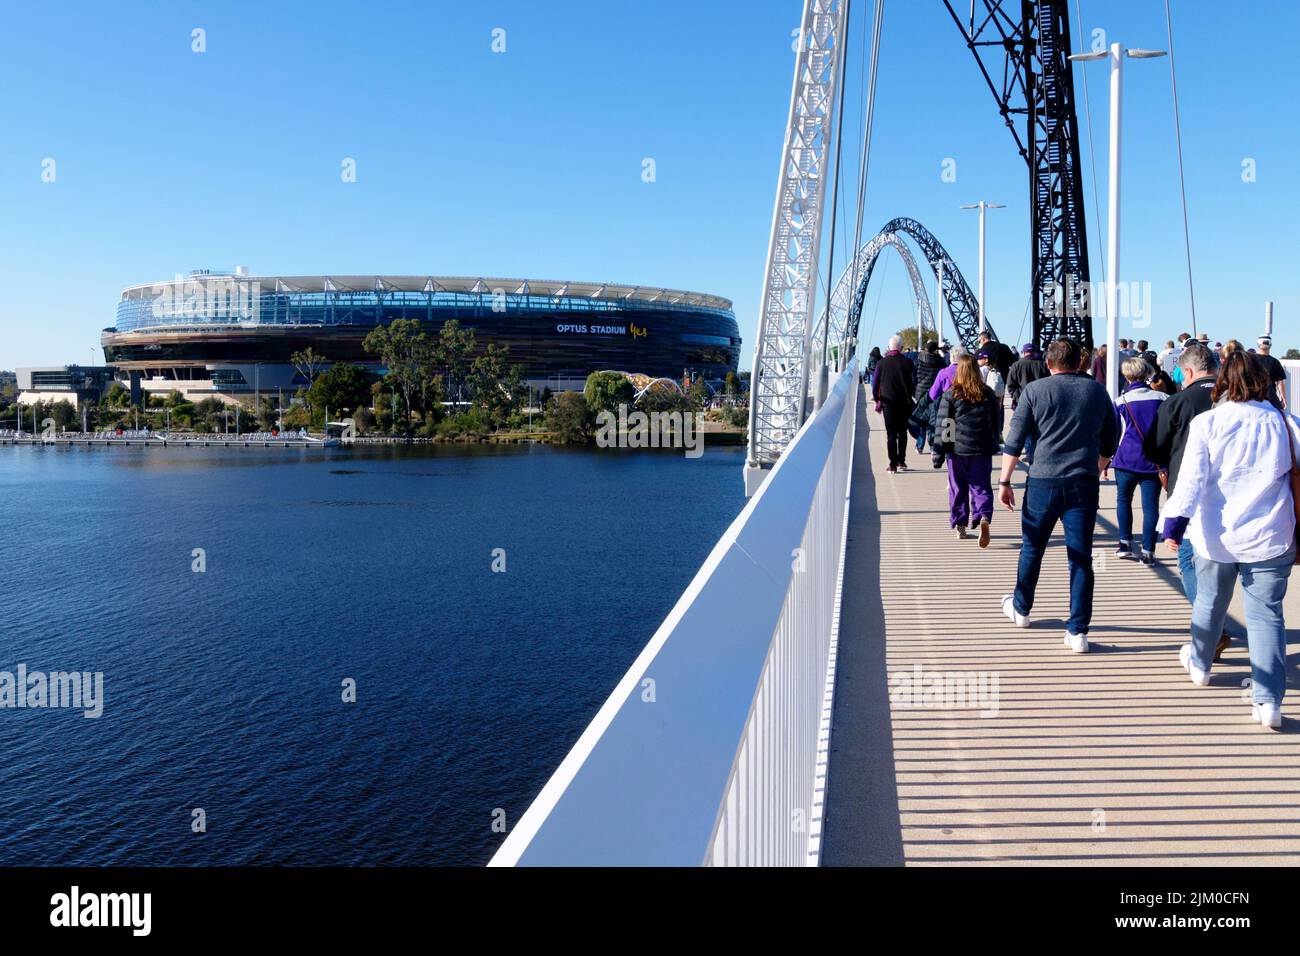 Matagarup pedestrian bridge crossing over the swan river with Perth Stadium, Burswood, Perth, Western Australia Stock Photo